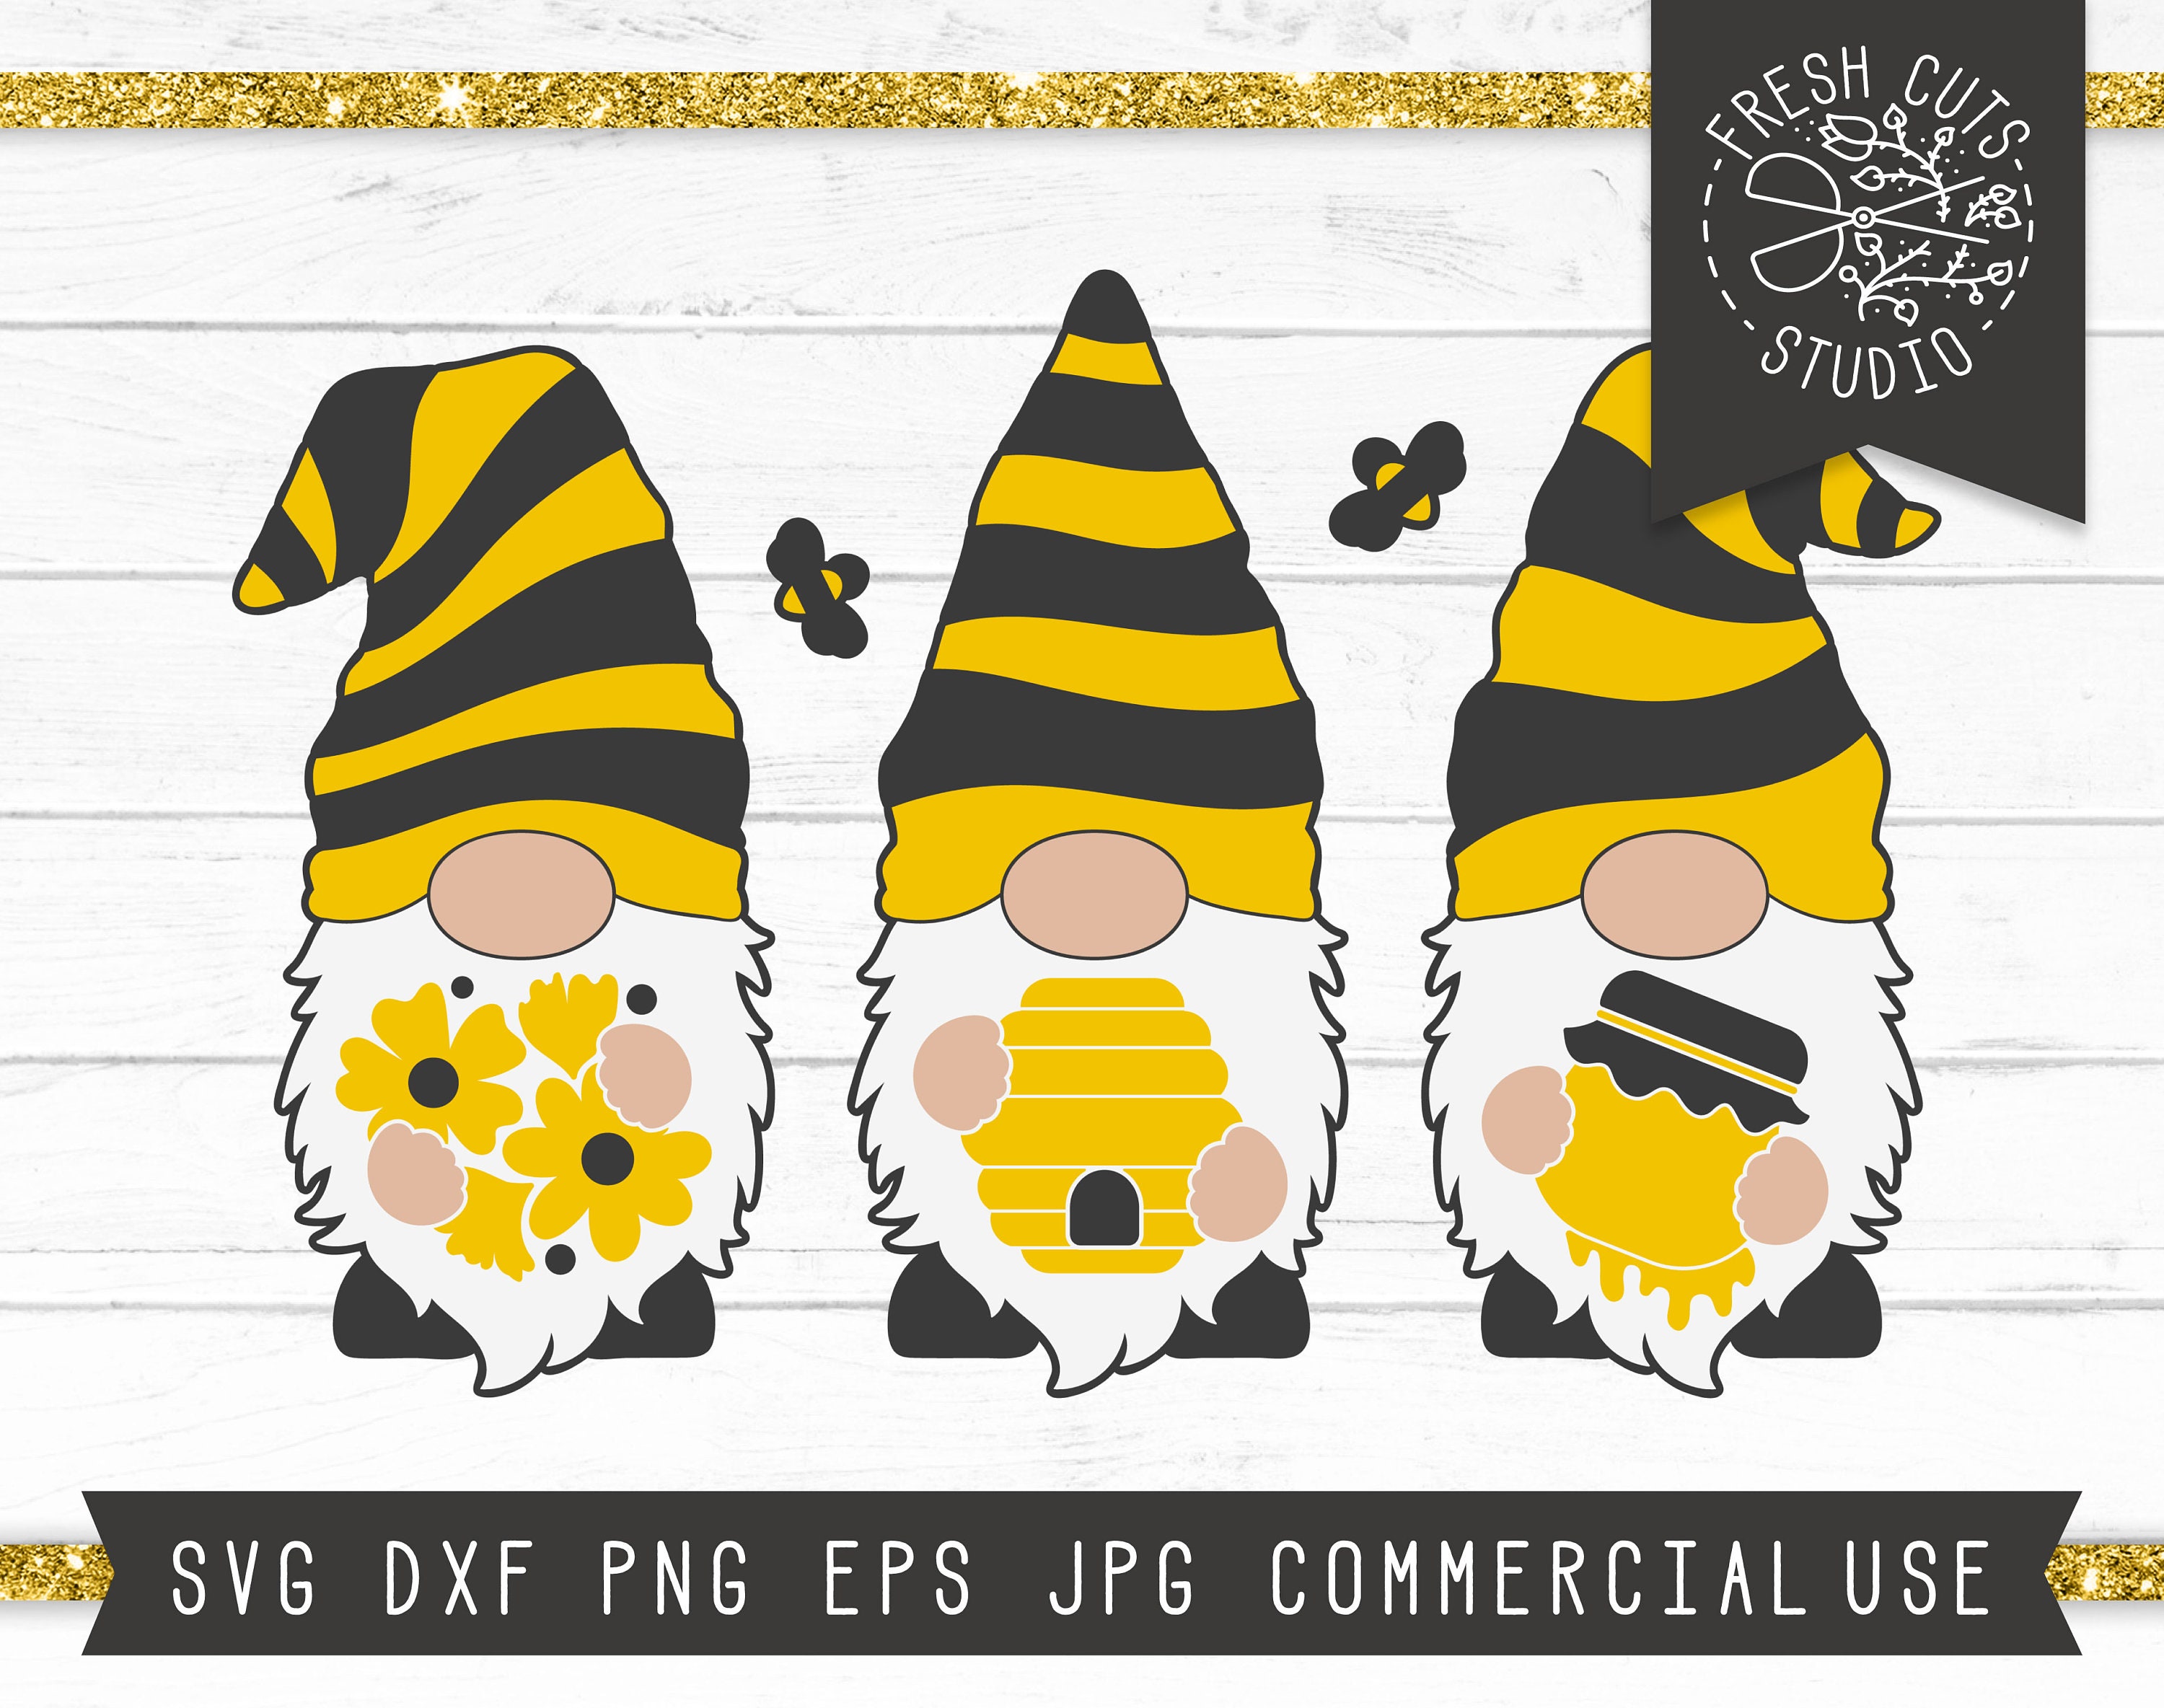 OrnamentallyYou Bee and Honey Themed Gnomes, Plush Bumblebee Home Decor - Girl